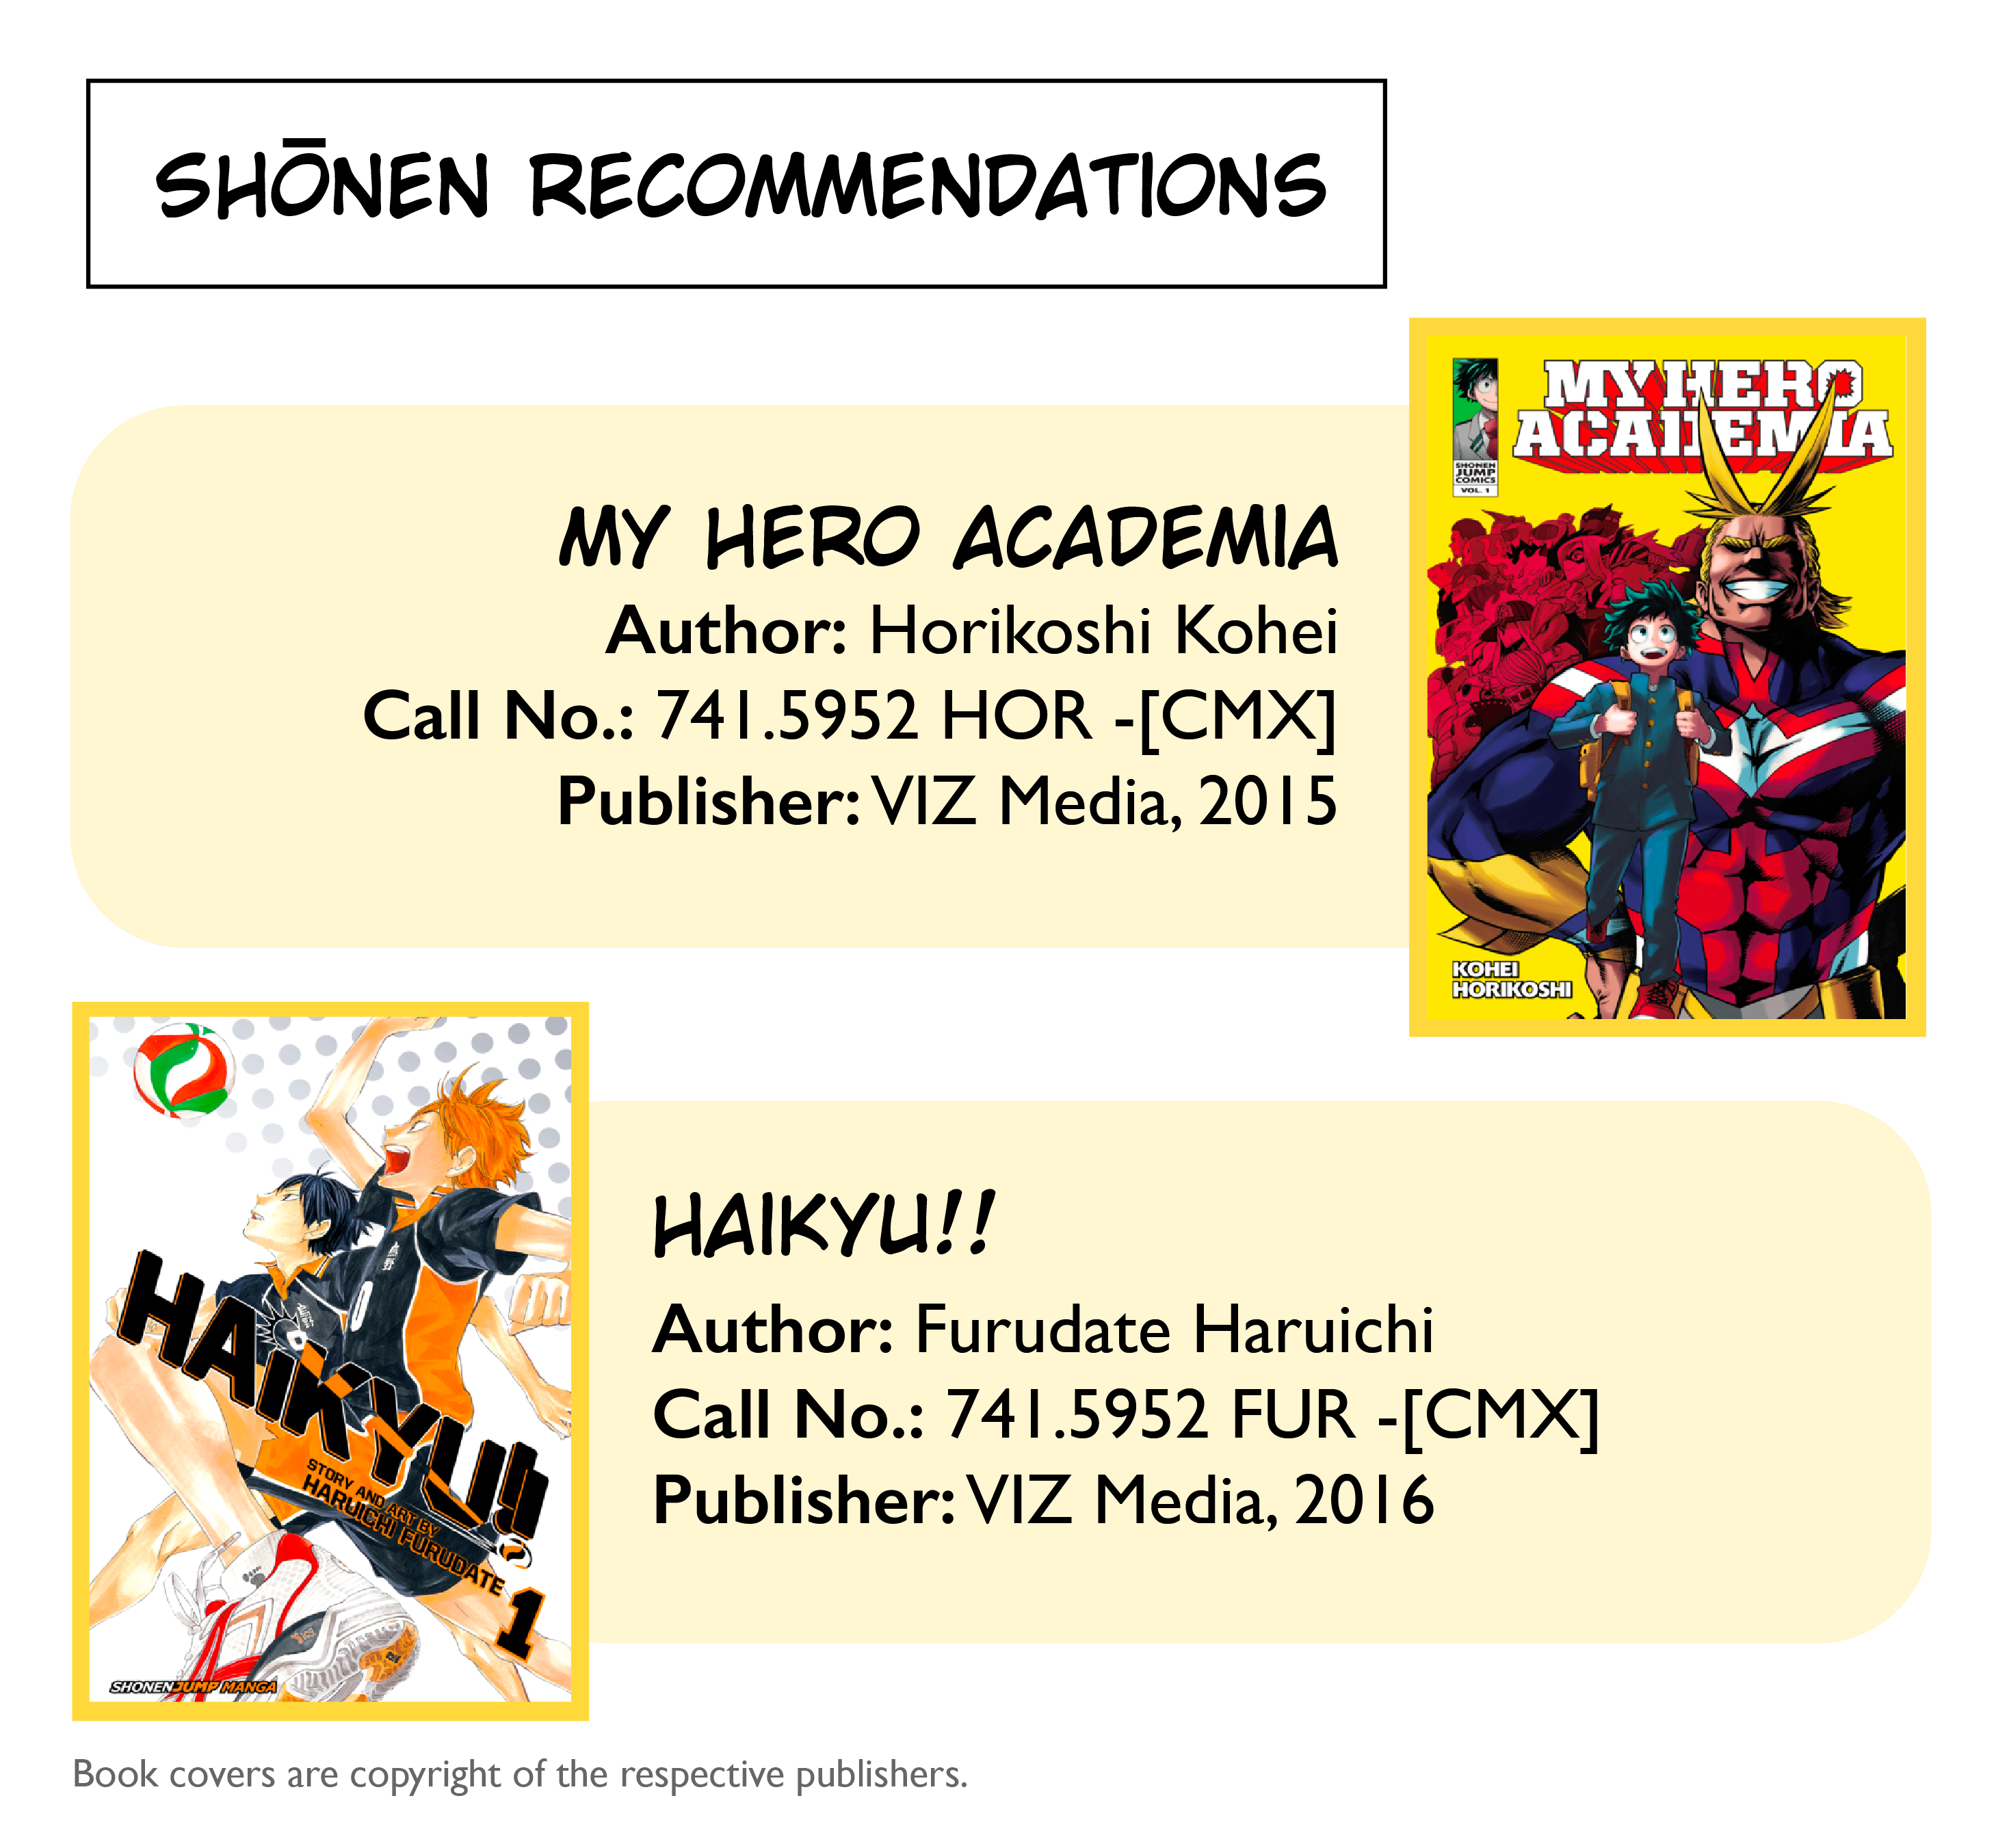 Shonen recommendations include My Hero Academia and Haikyuu!